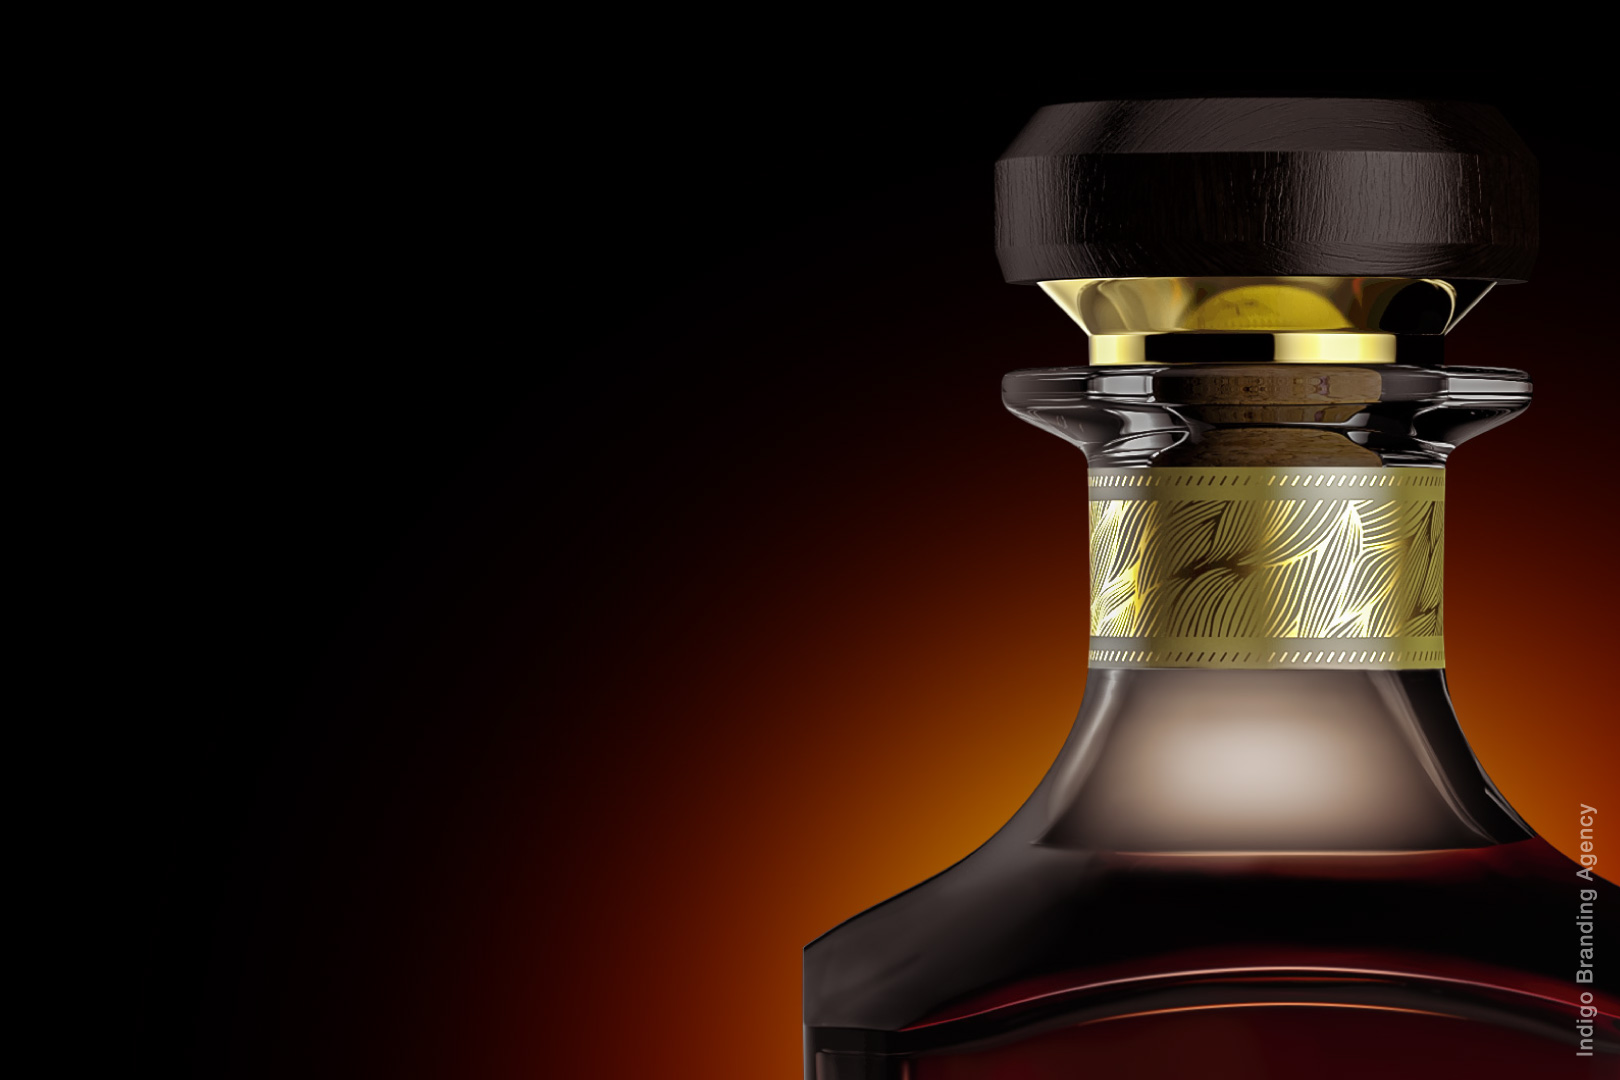 Armenian Symbol brandy branding and labeling design by Indigo branding